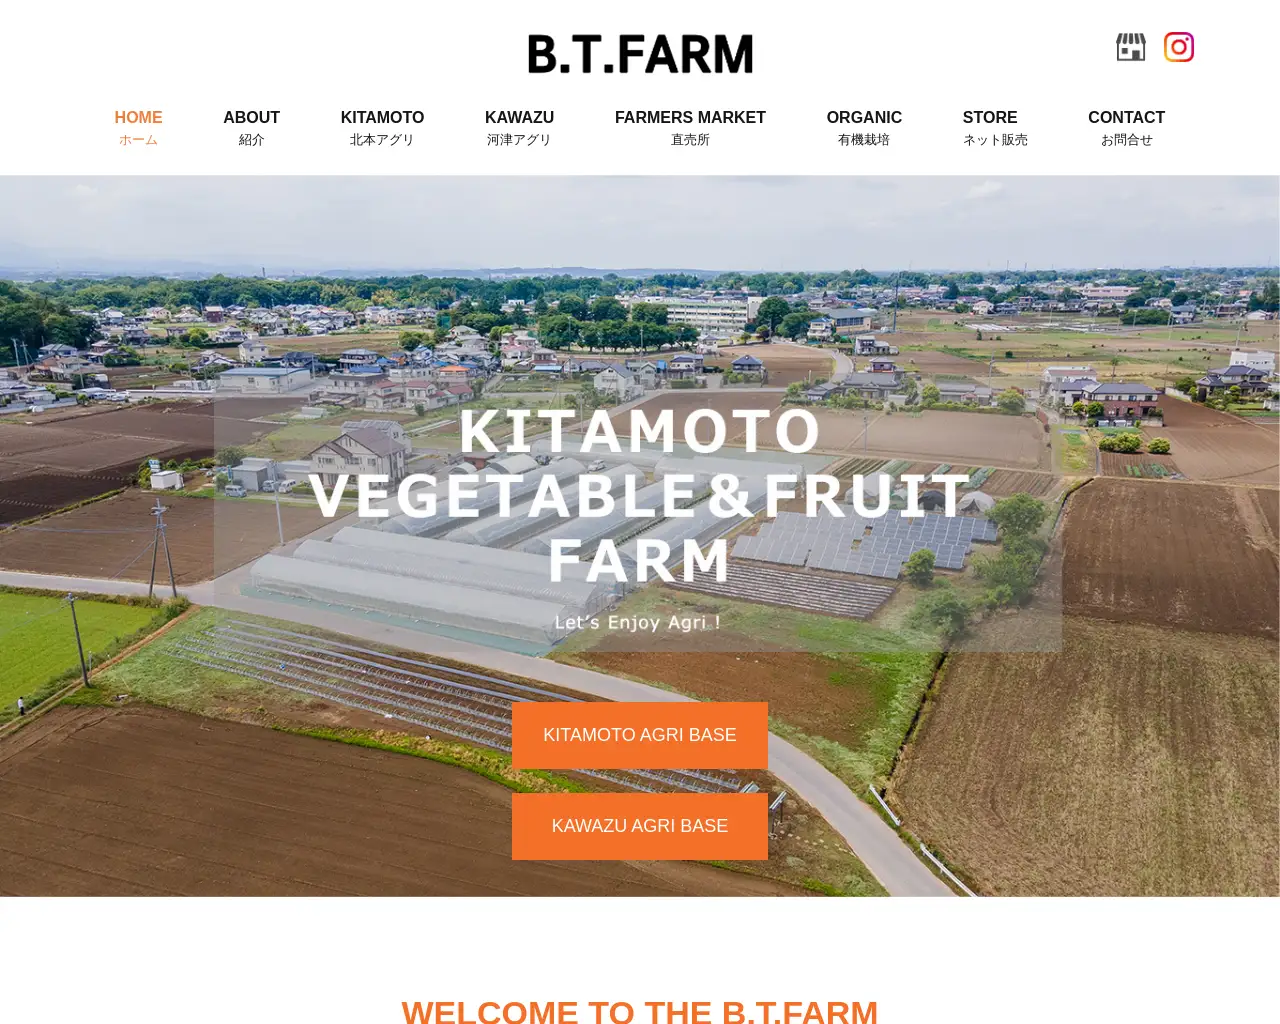 B.T.FARM KITAMOTO AGRI BASE(ビーティーファーム 北本アグリベース) site